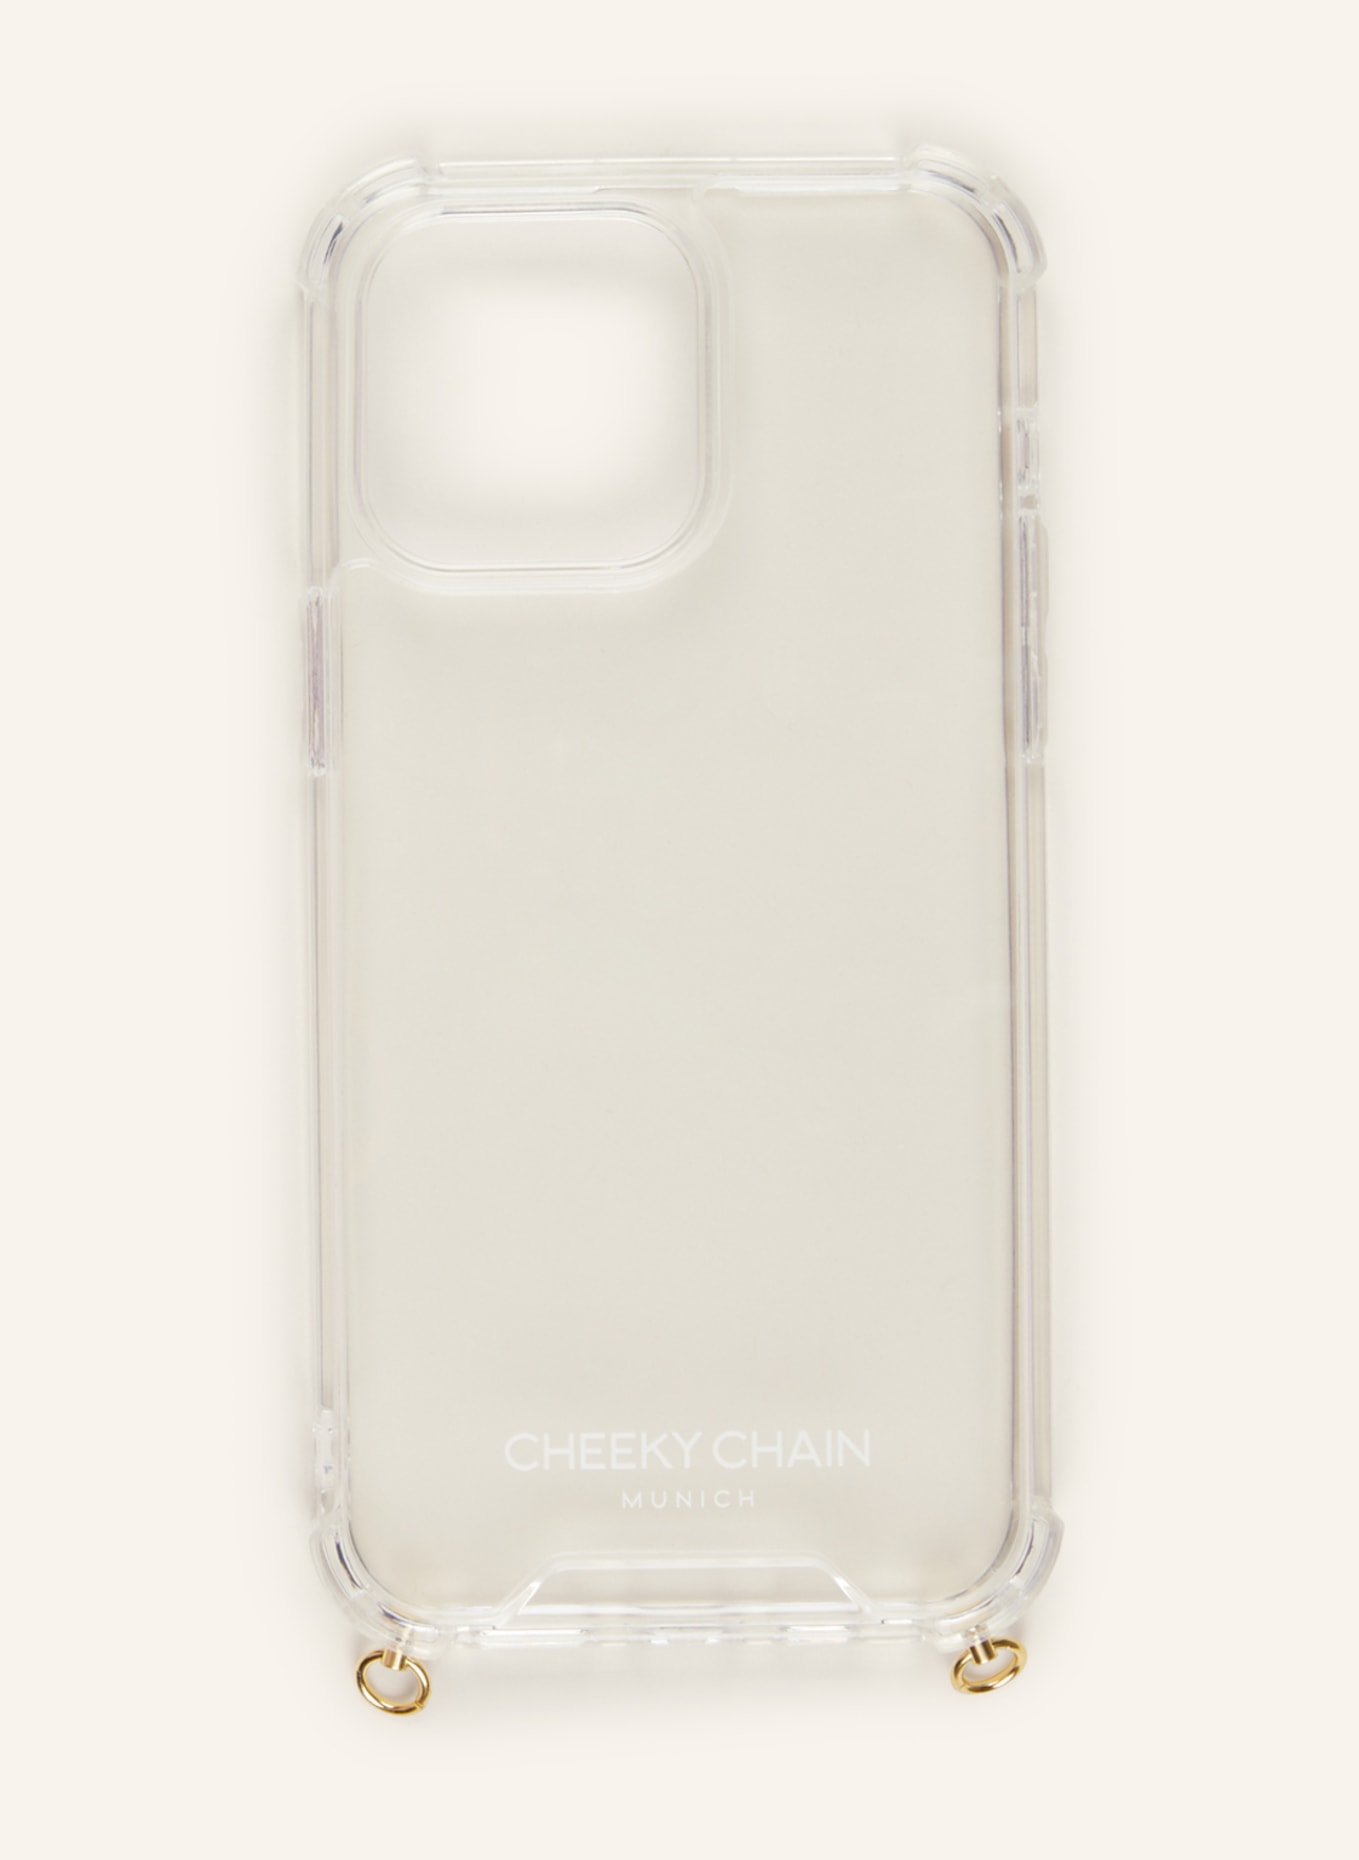 CHEEKY CHAIN MUNICH Smartphone-Hülle, Farbe: crystal clear gold (Bild 1)